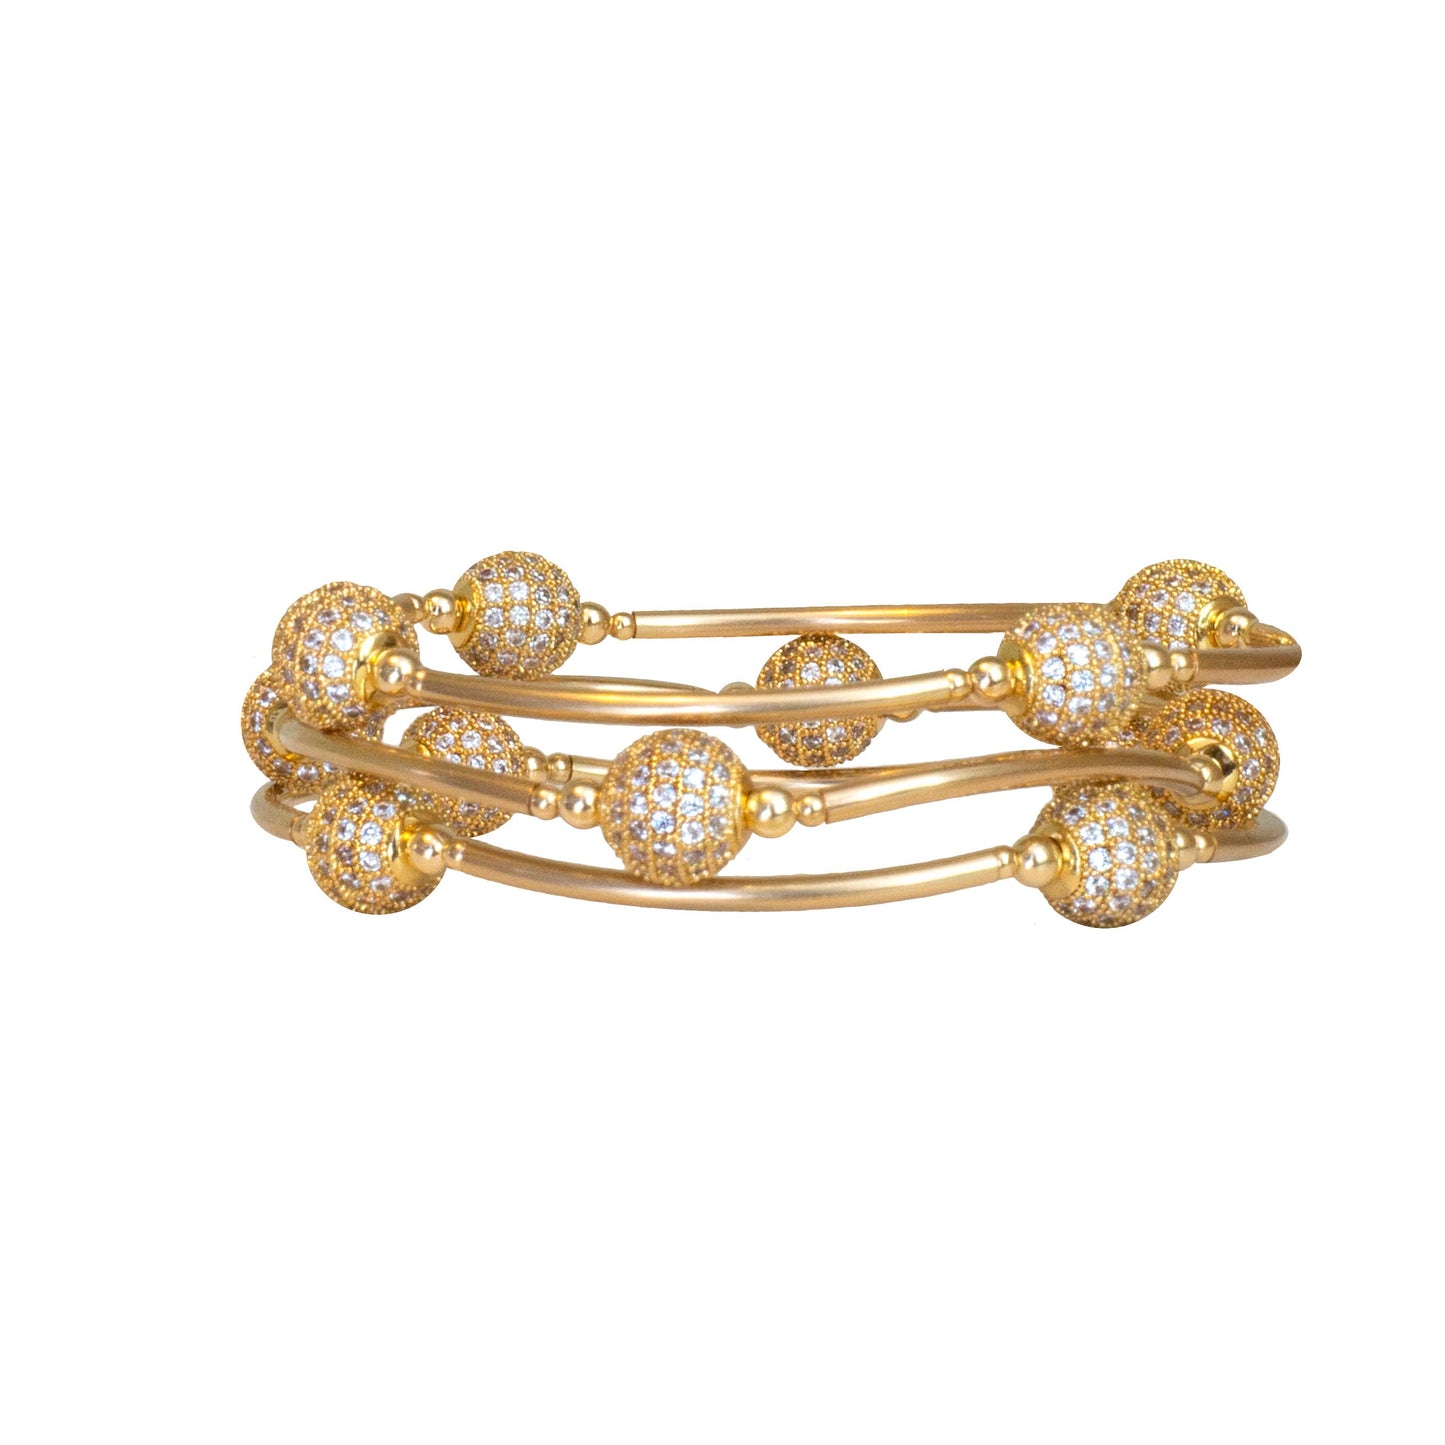 8mm Crystal Pave Blessing Bracelet with Gold-filled Links: L